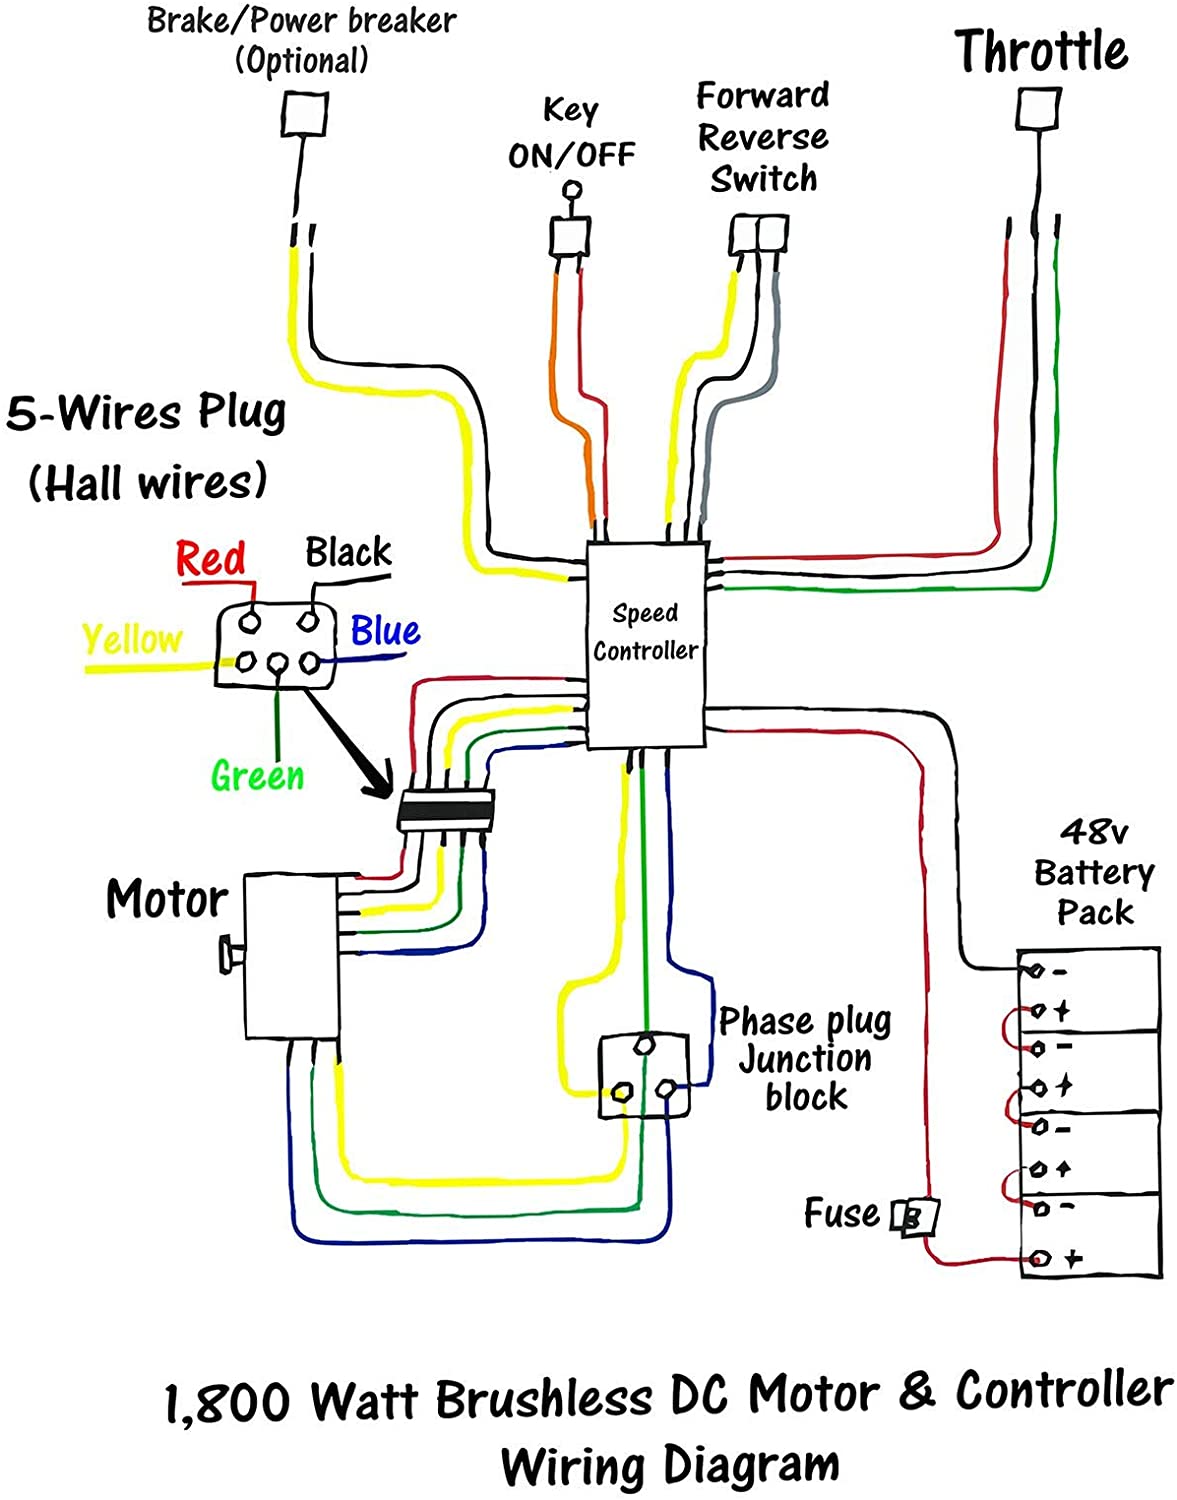 Mac mini wiring diagrams stand for mac